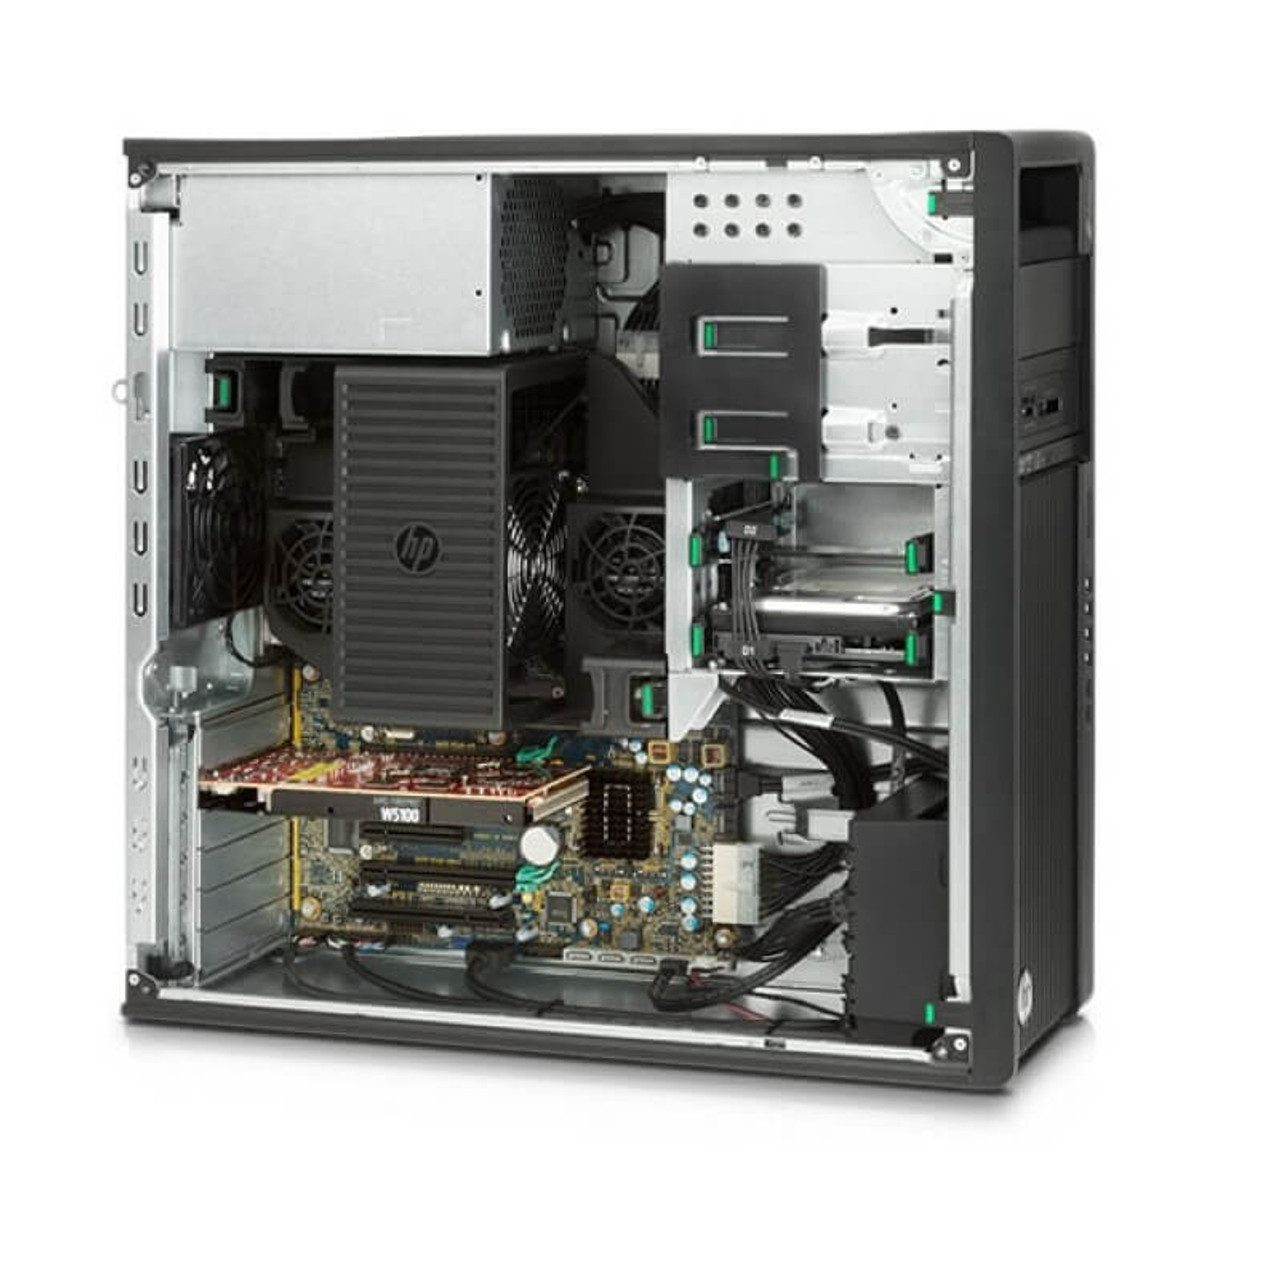 HP Z440 AutoCAD Workstation E5-1630v4 4 Cores 3.7Ghz 32GB 1TB SSD